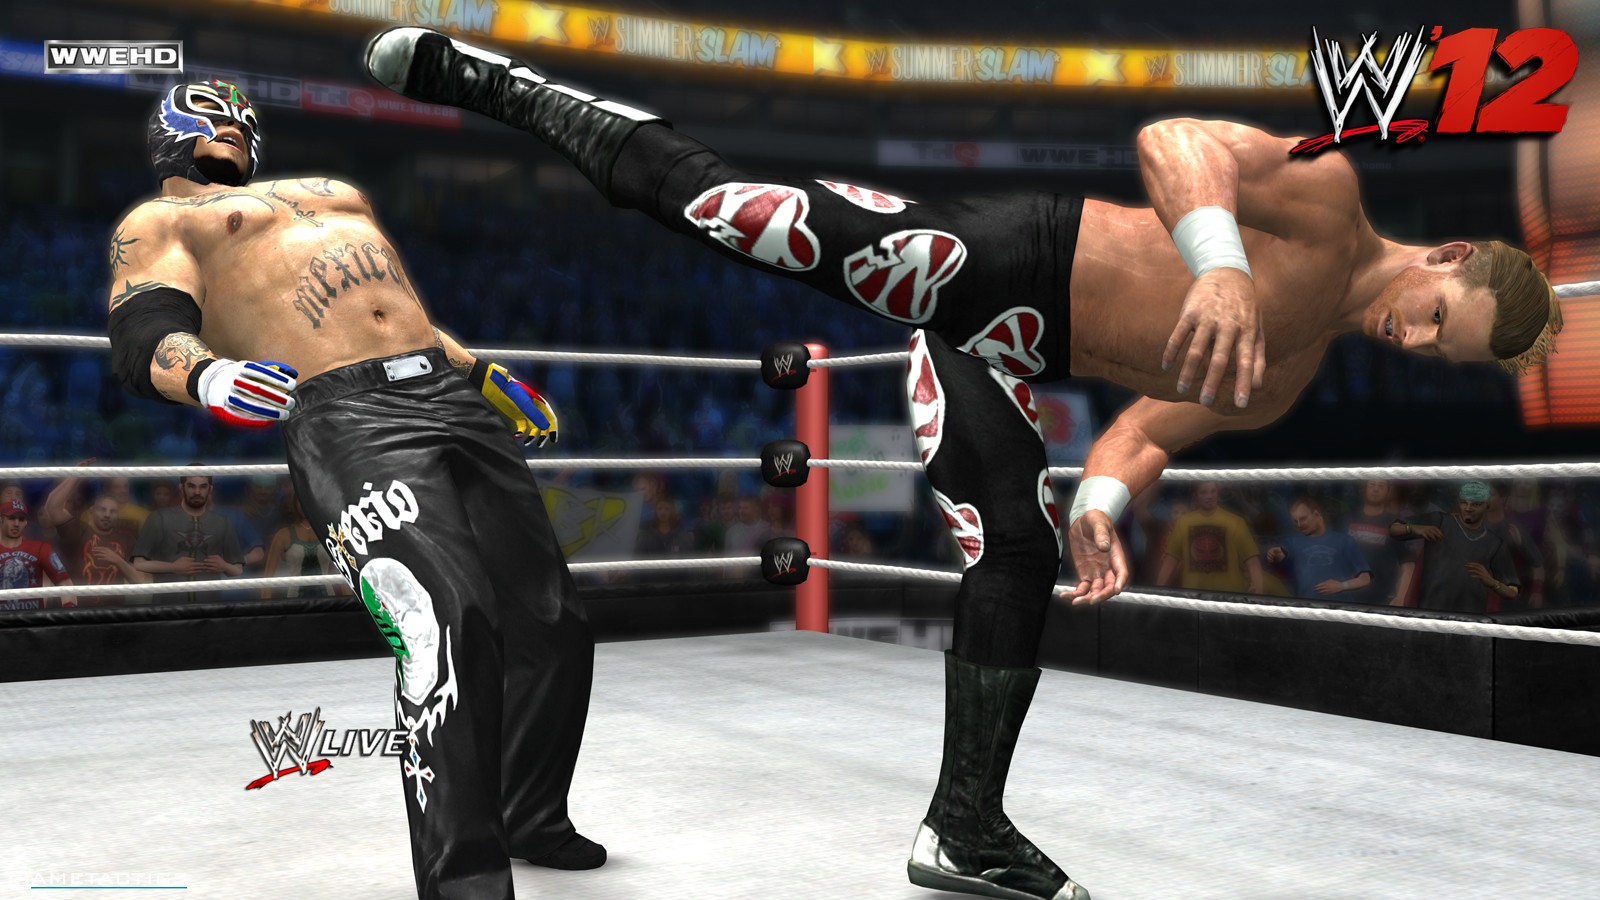 WWE 12 First DLC Featured Wrestlers and Screenshots